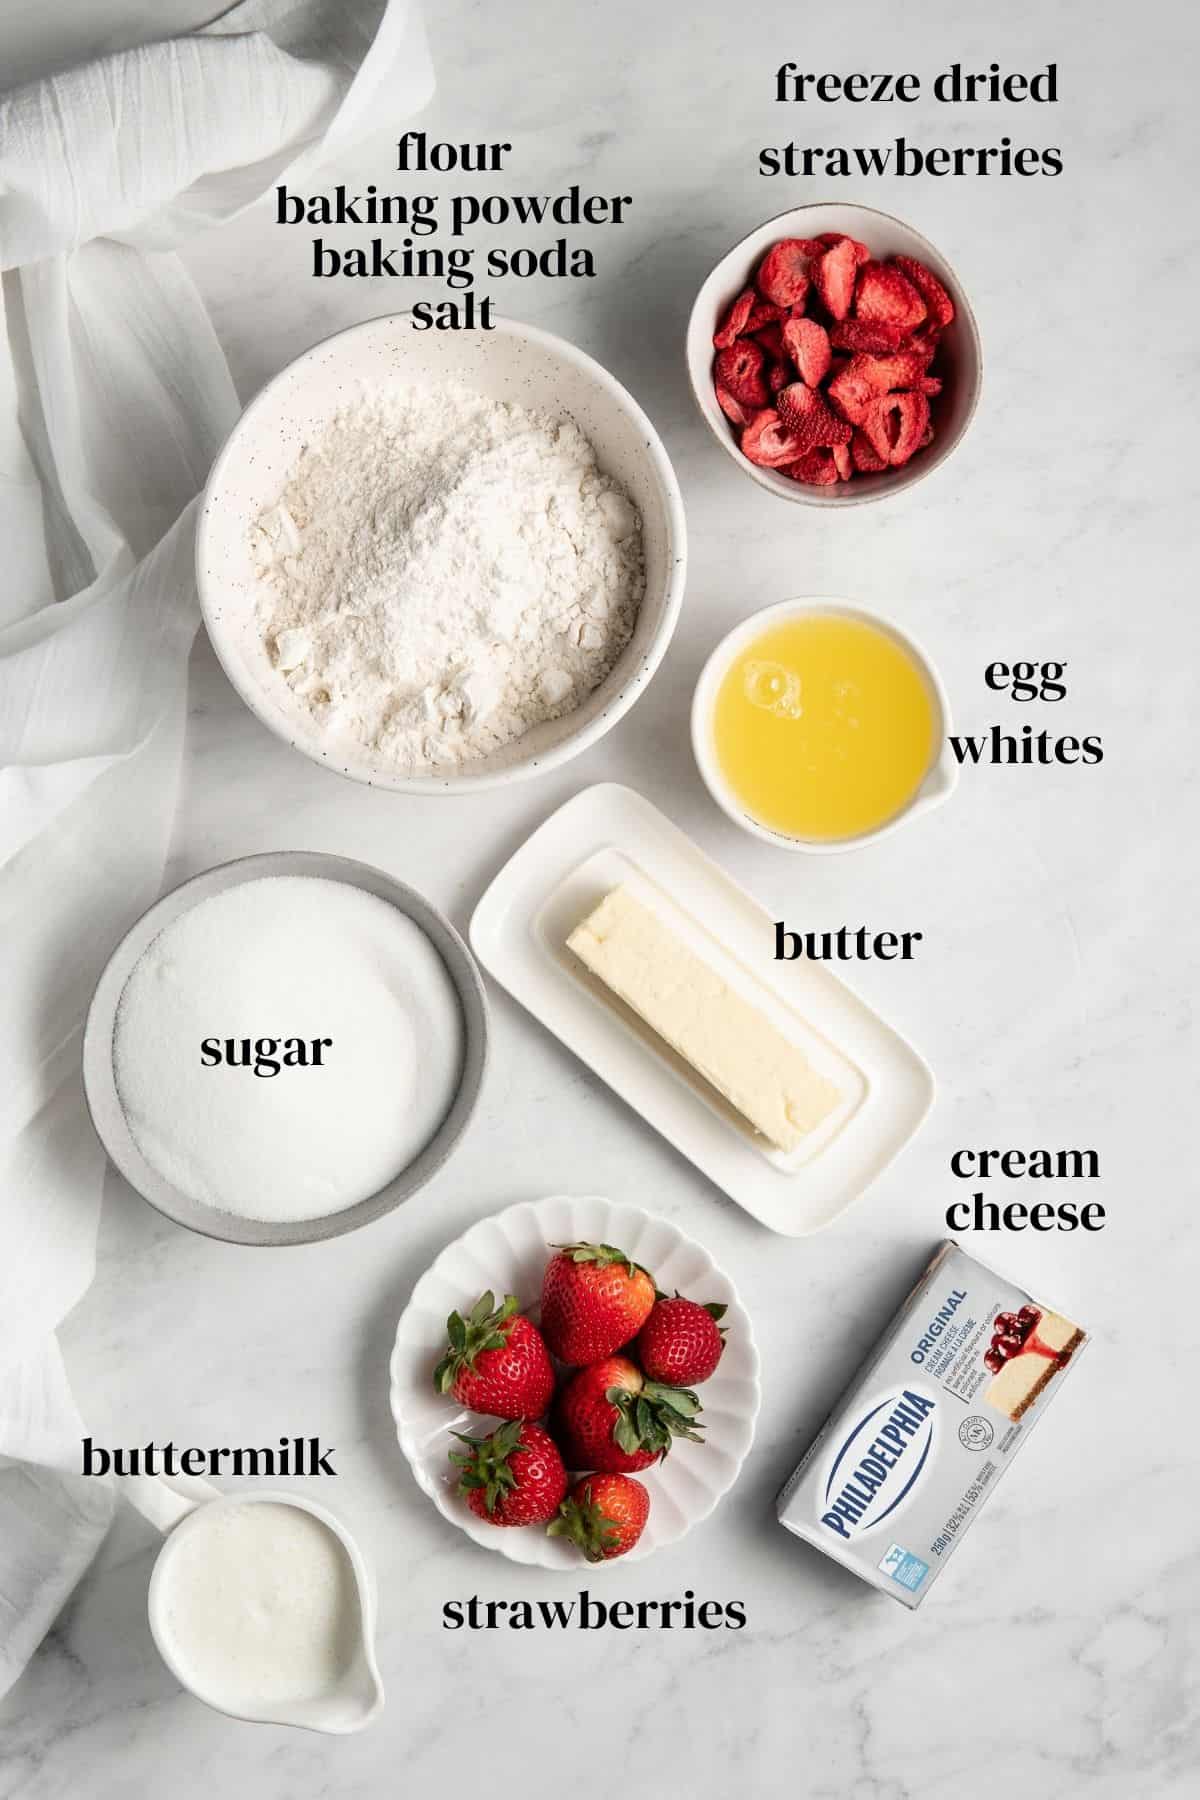 Flour, freeze dried strawberries, egg whites, butter, sugar, strawberries,  cream cheese, buttermilk in bowls.